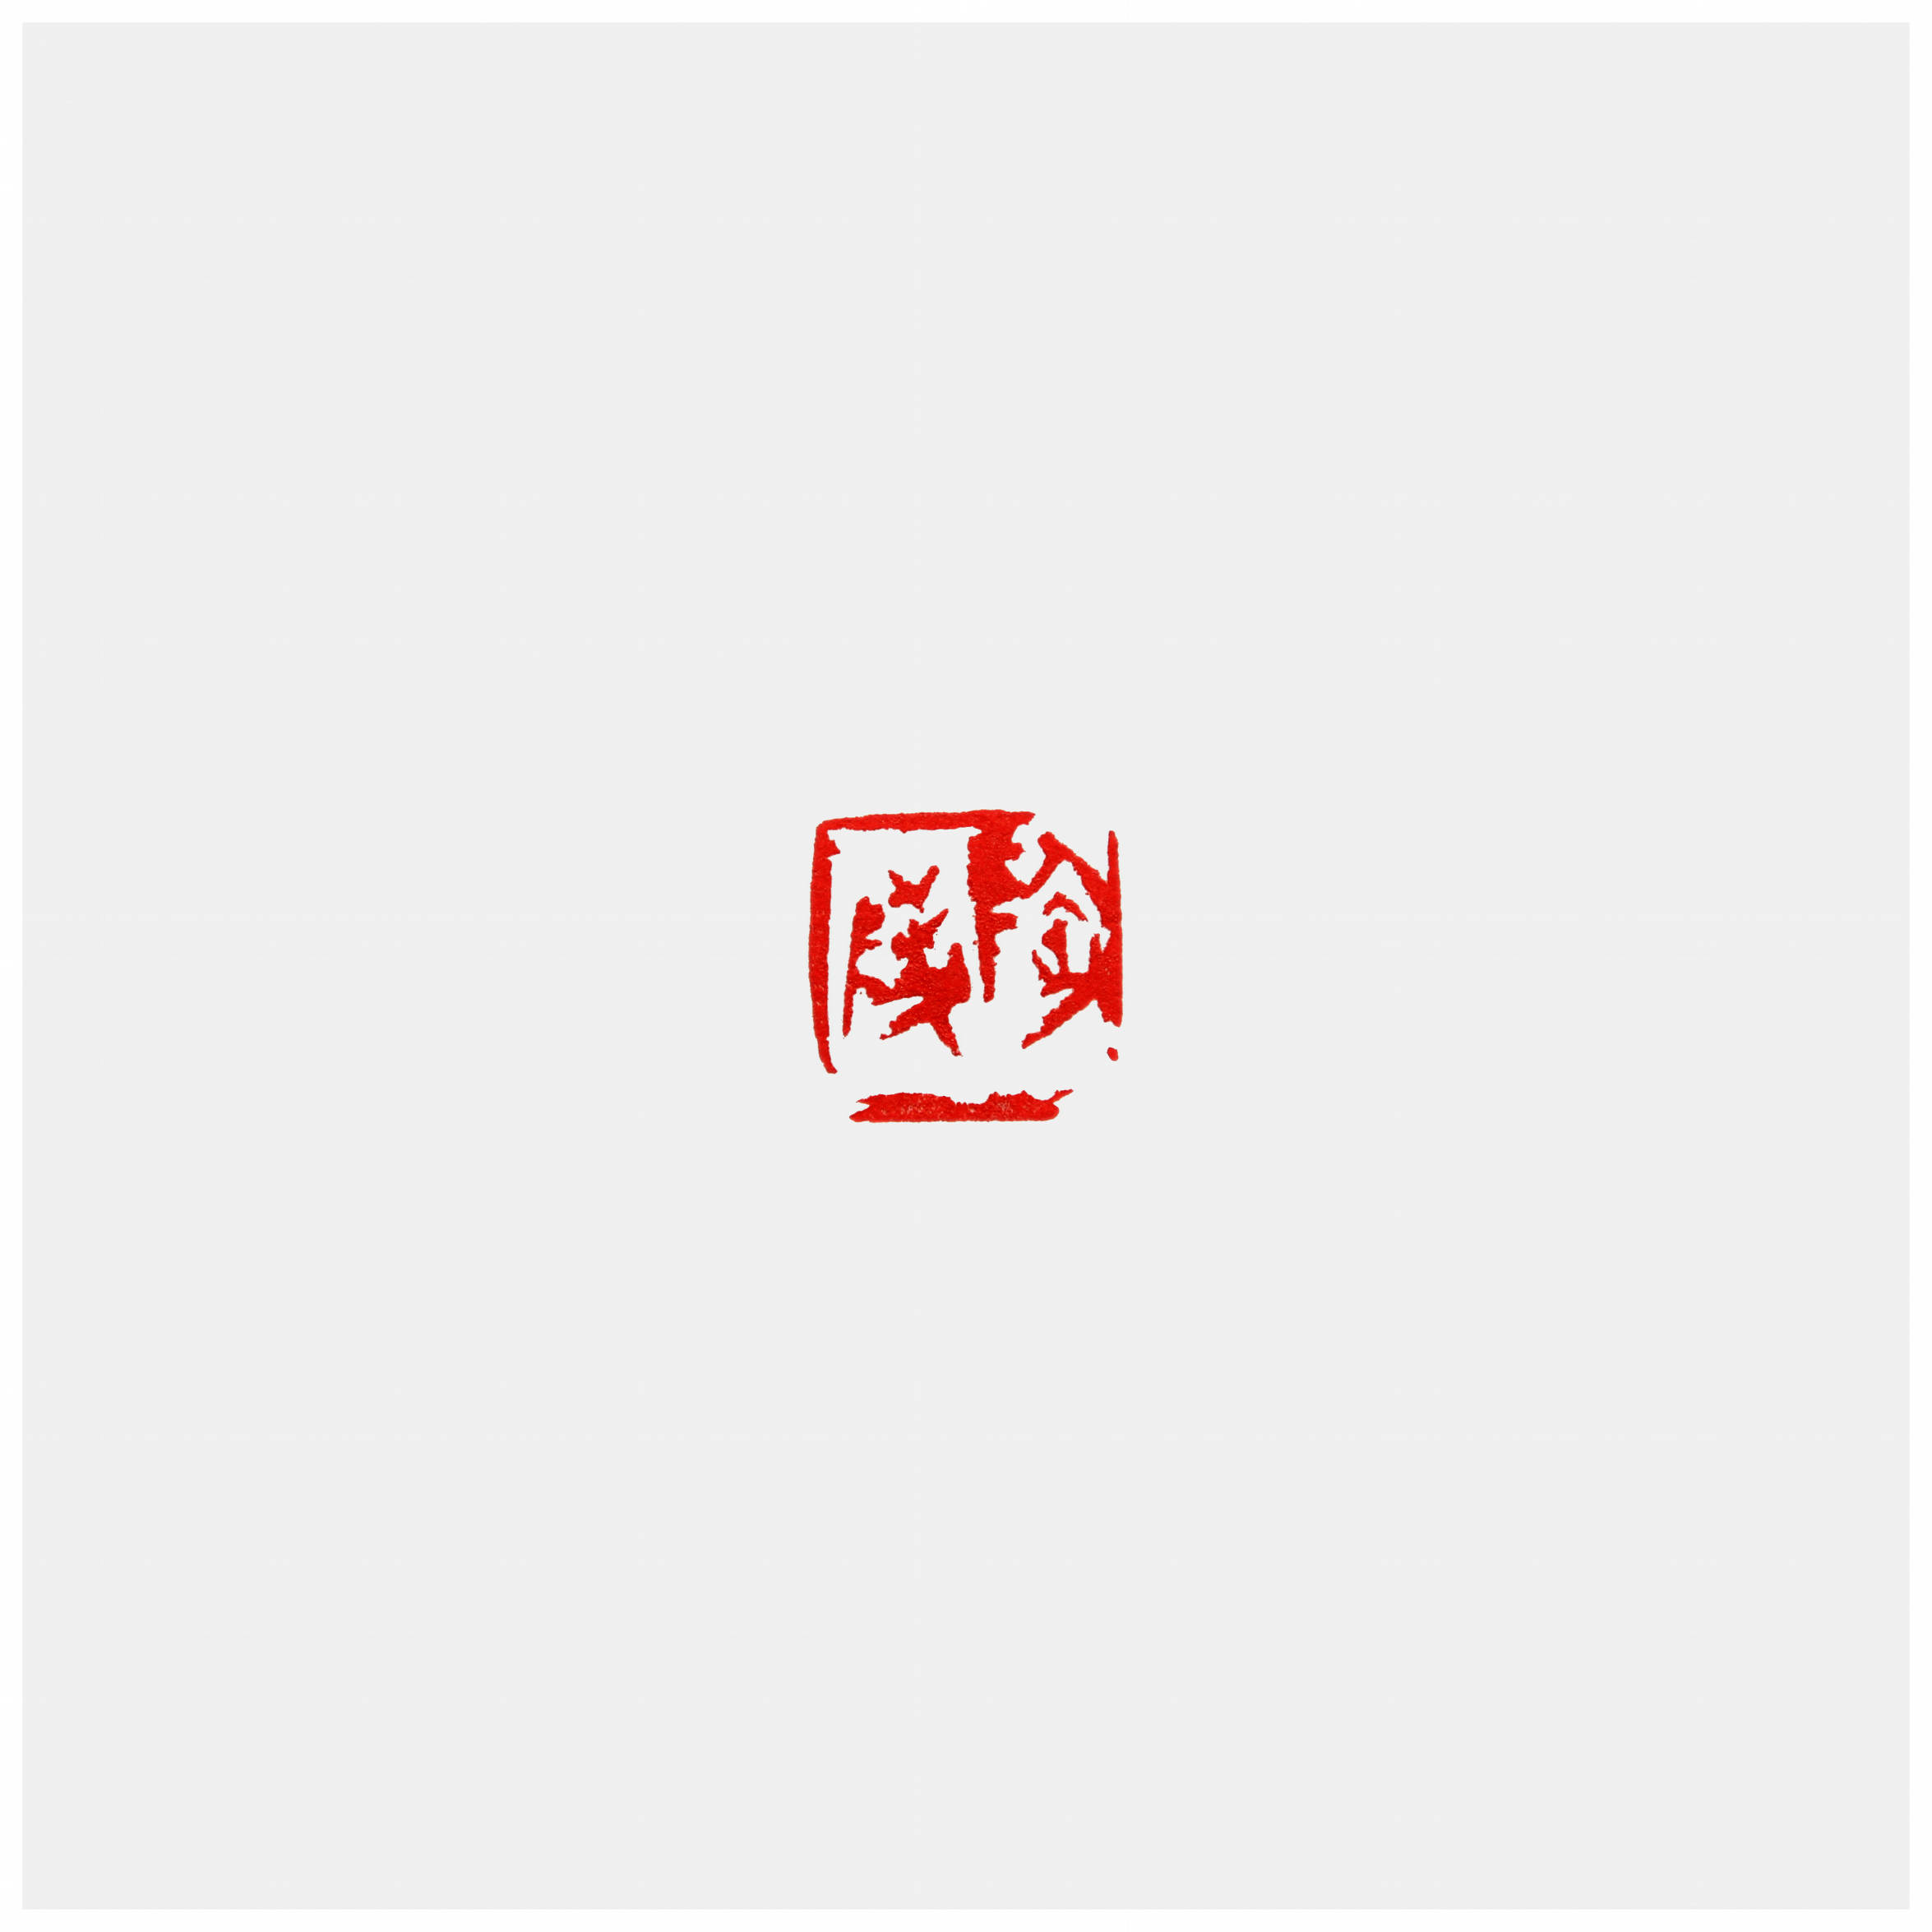 Qi Hong (Sai Koh) 's freehand brushwork style semi-seal script name seal carving (aka Chinese seal engraving, seal cutting) imprint: Tao Ling, 18×18mm, stone